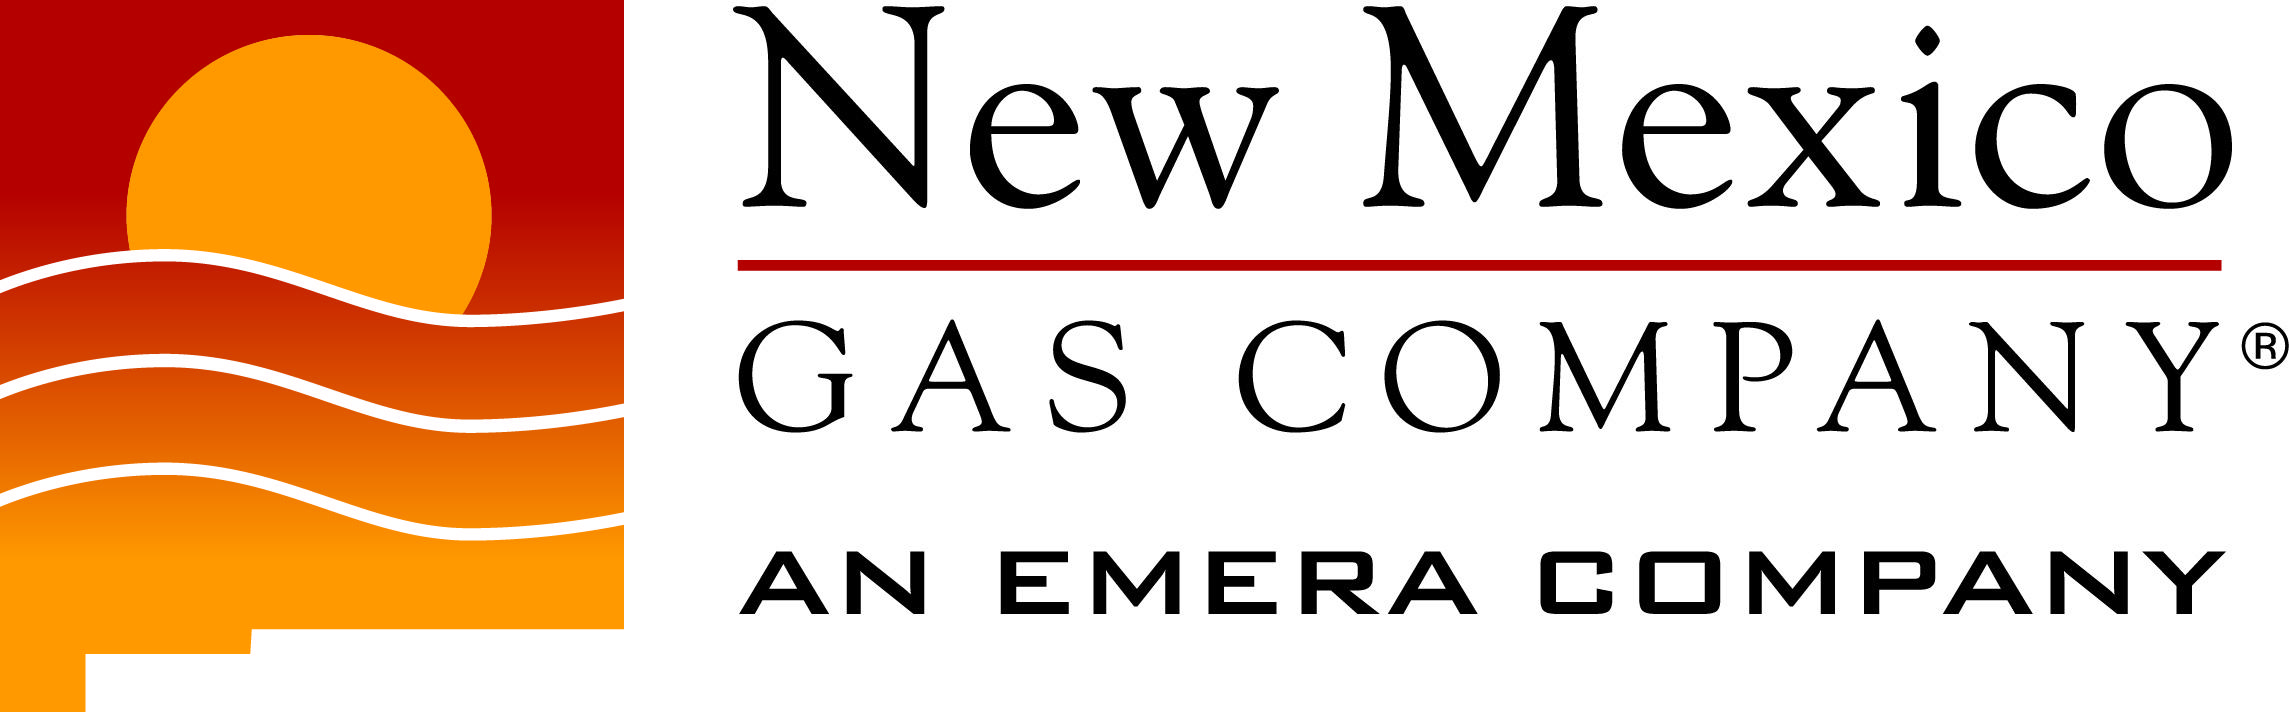 Gas Company Logo - New Mexico Gas Company Logo Mexico Ethics In Business Awards